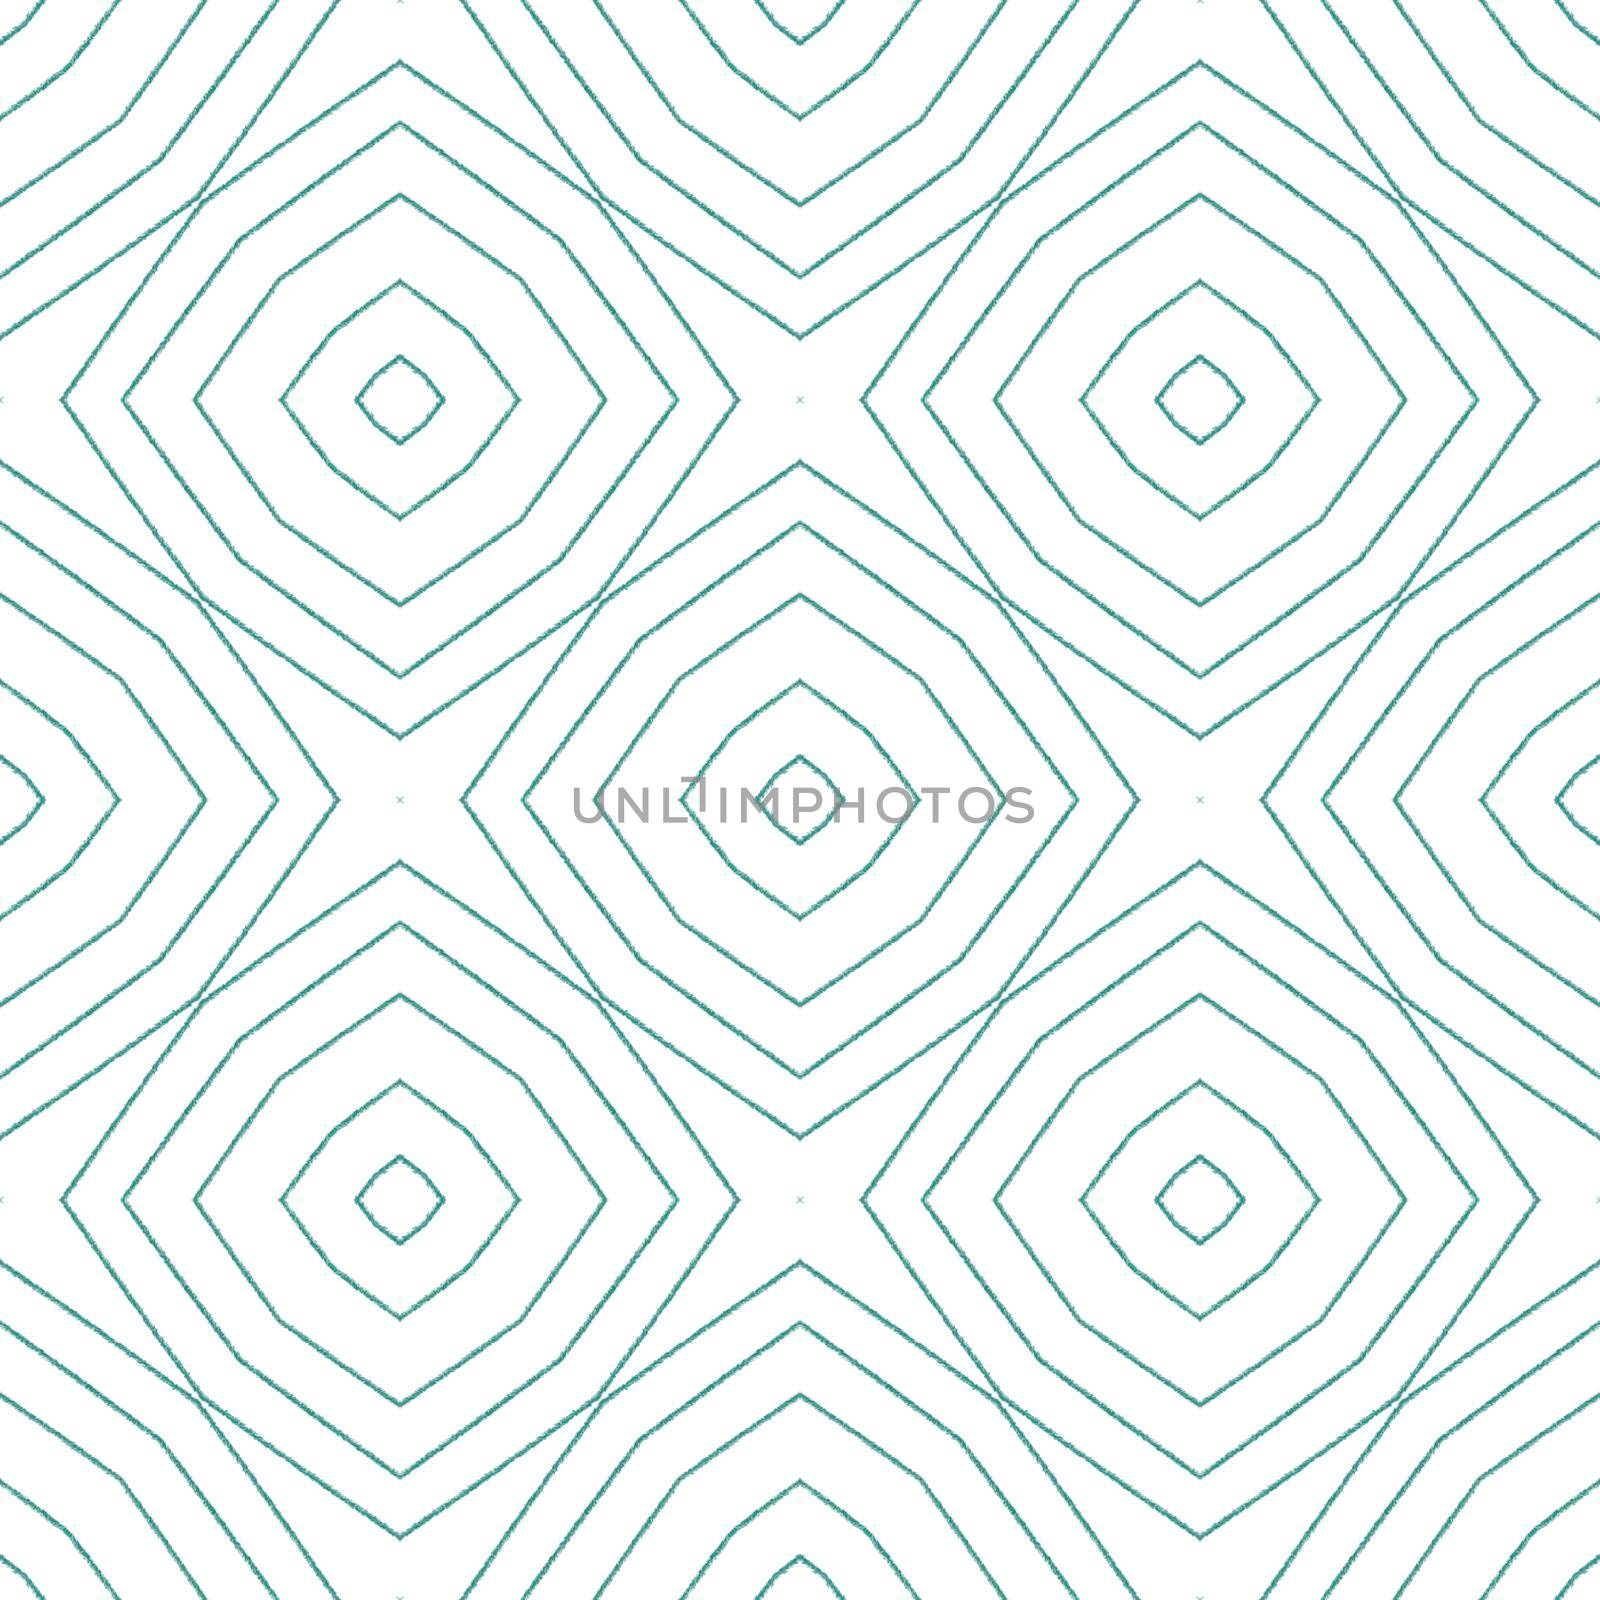 Textured stripes pattern. Turquoise symmetrical kaleidoscope background. Textile ready ravishing print, swimwear fabric, wallpaper, wrapping. Trendy textured stripes design.